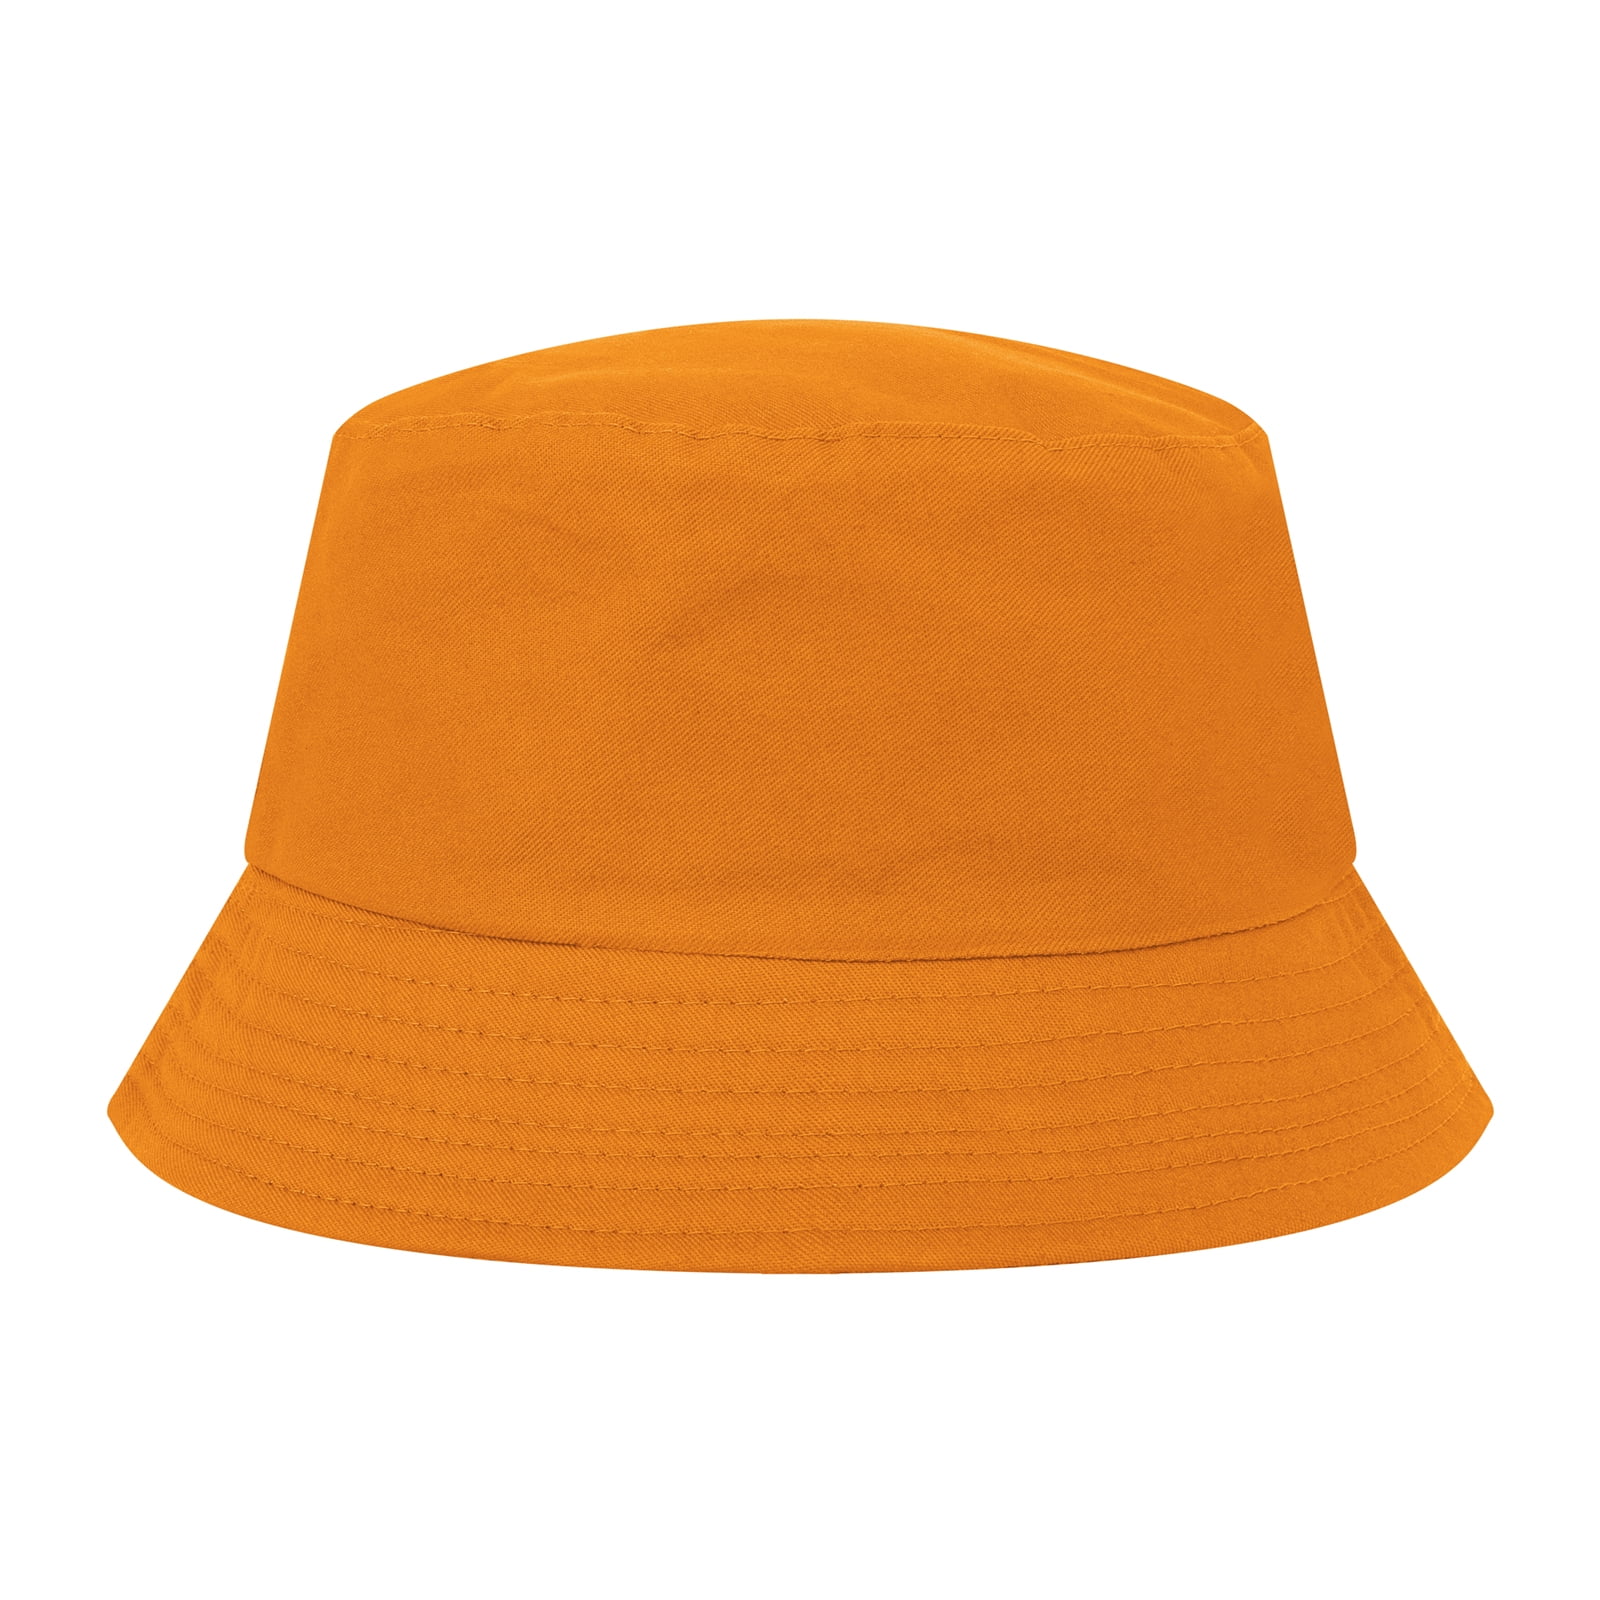 Toptie Blank Cotton Bucket Hat Fishing Hunting Hat Unisex Summer Outdoor  Cap-Orange 